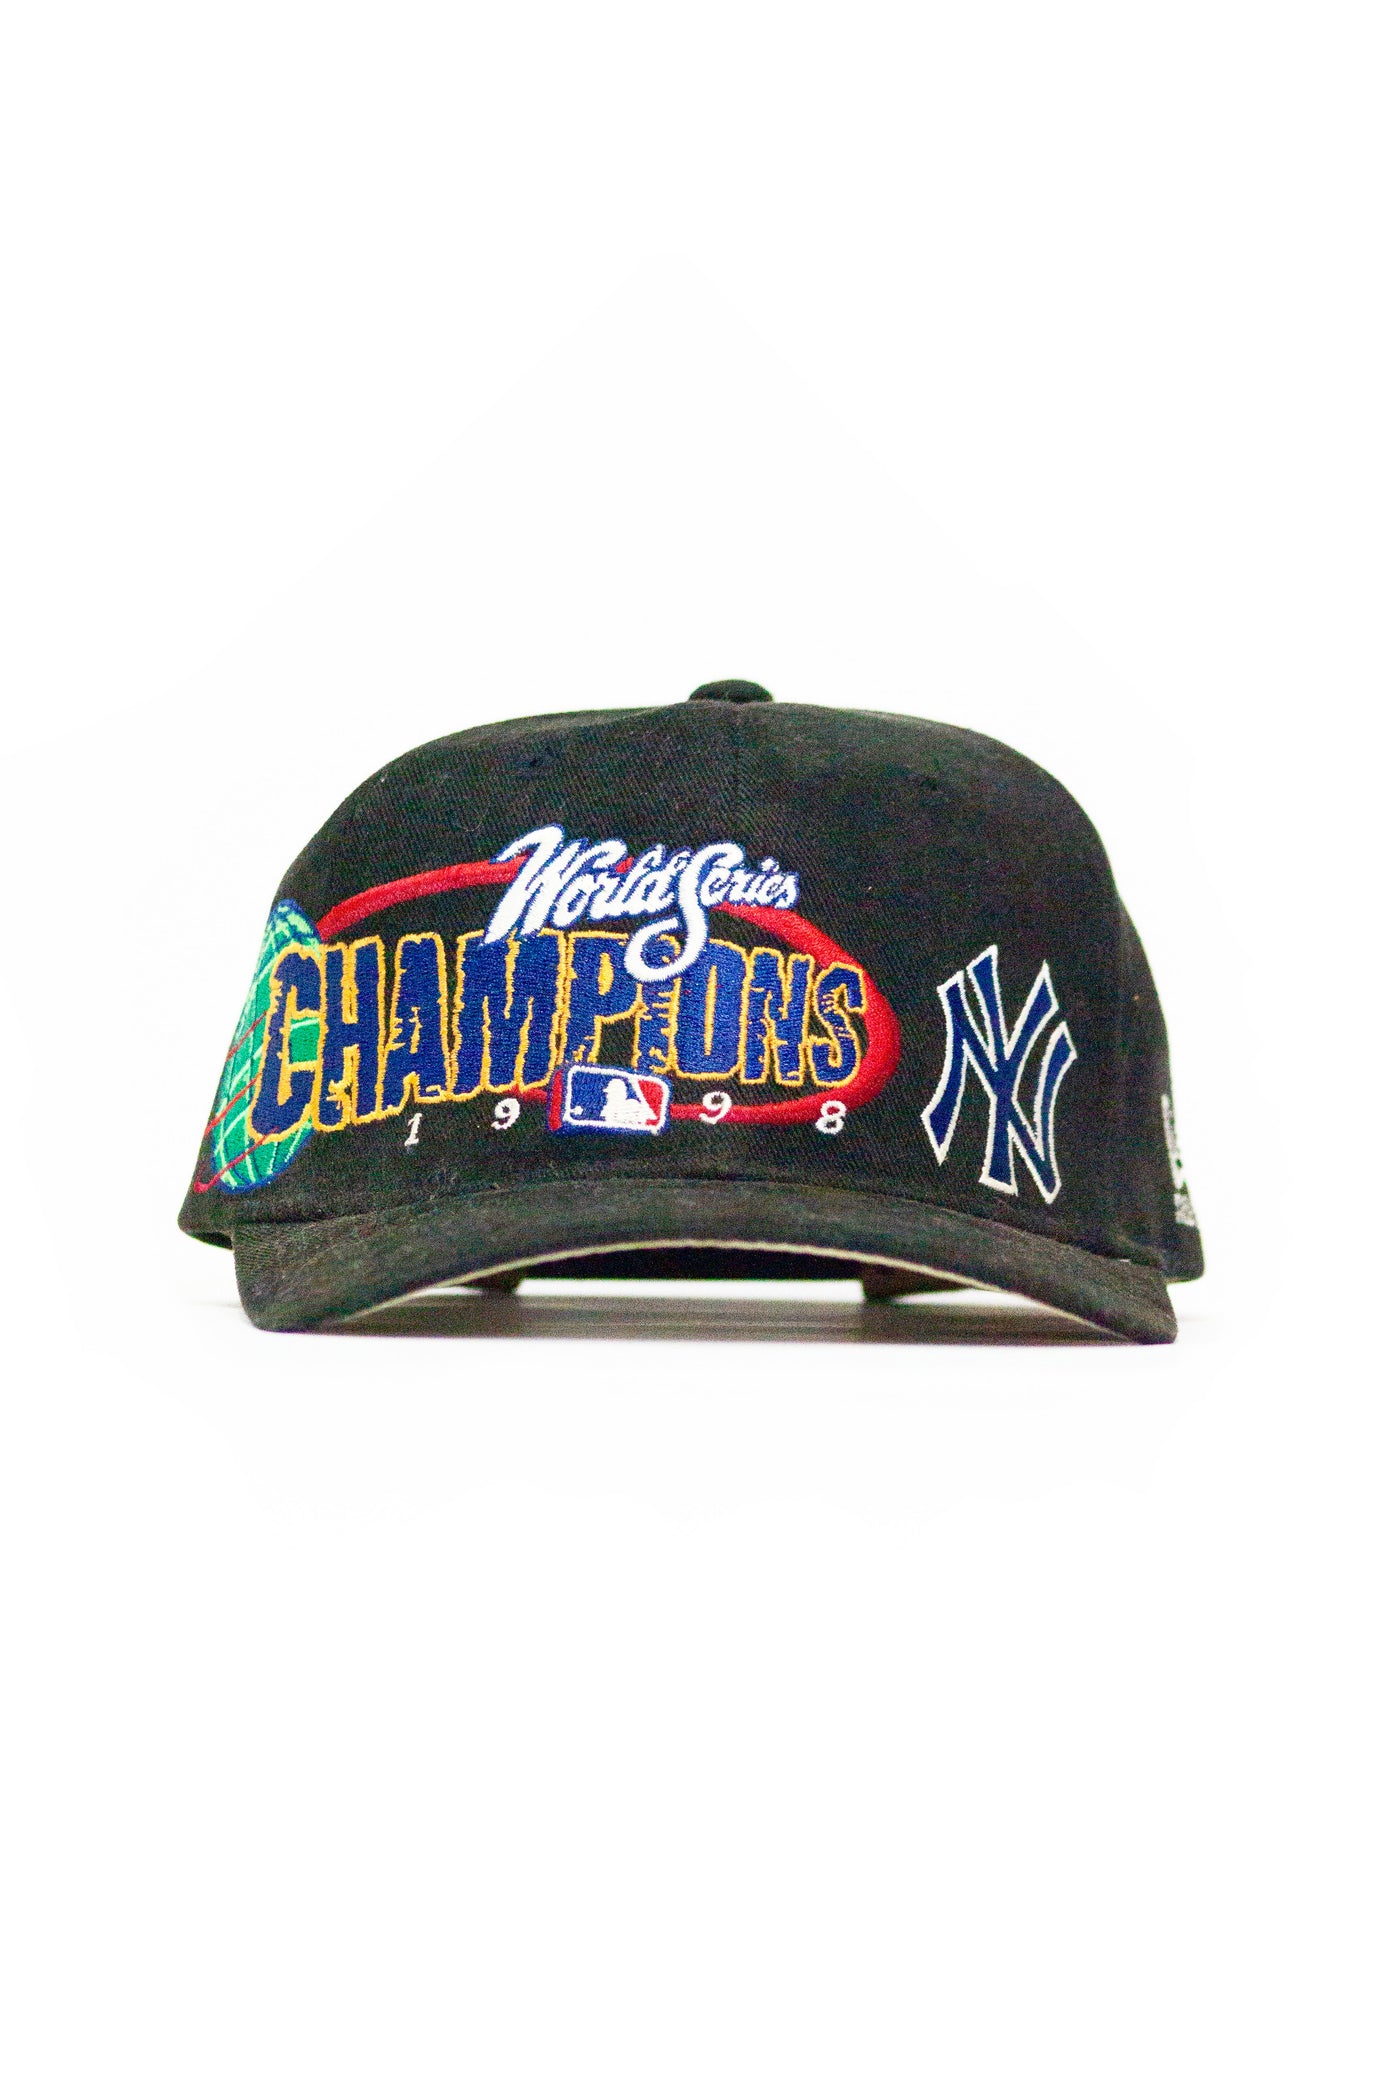 Vintage 1998 Yankees World Series Champions Snapback